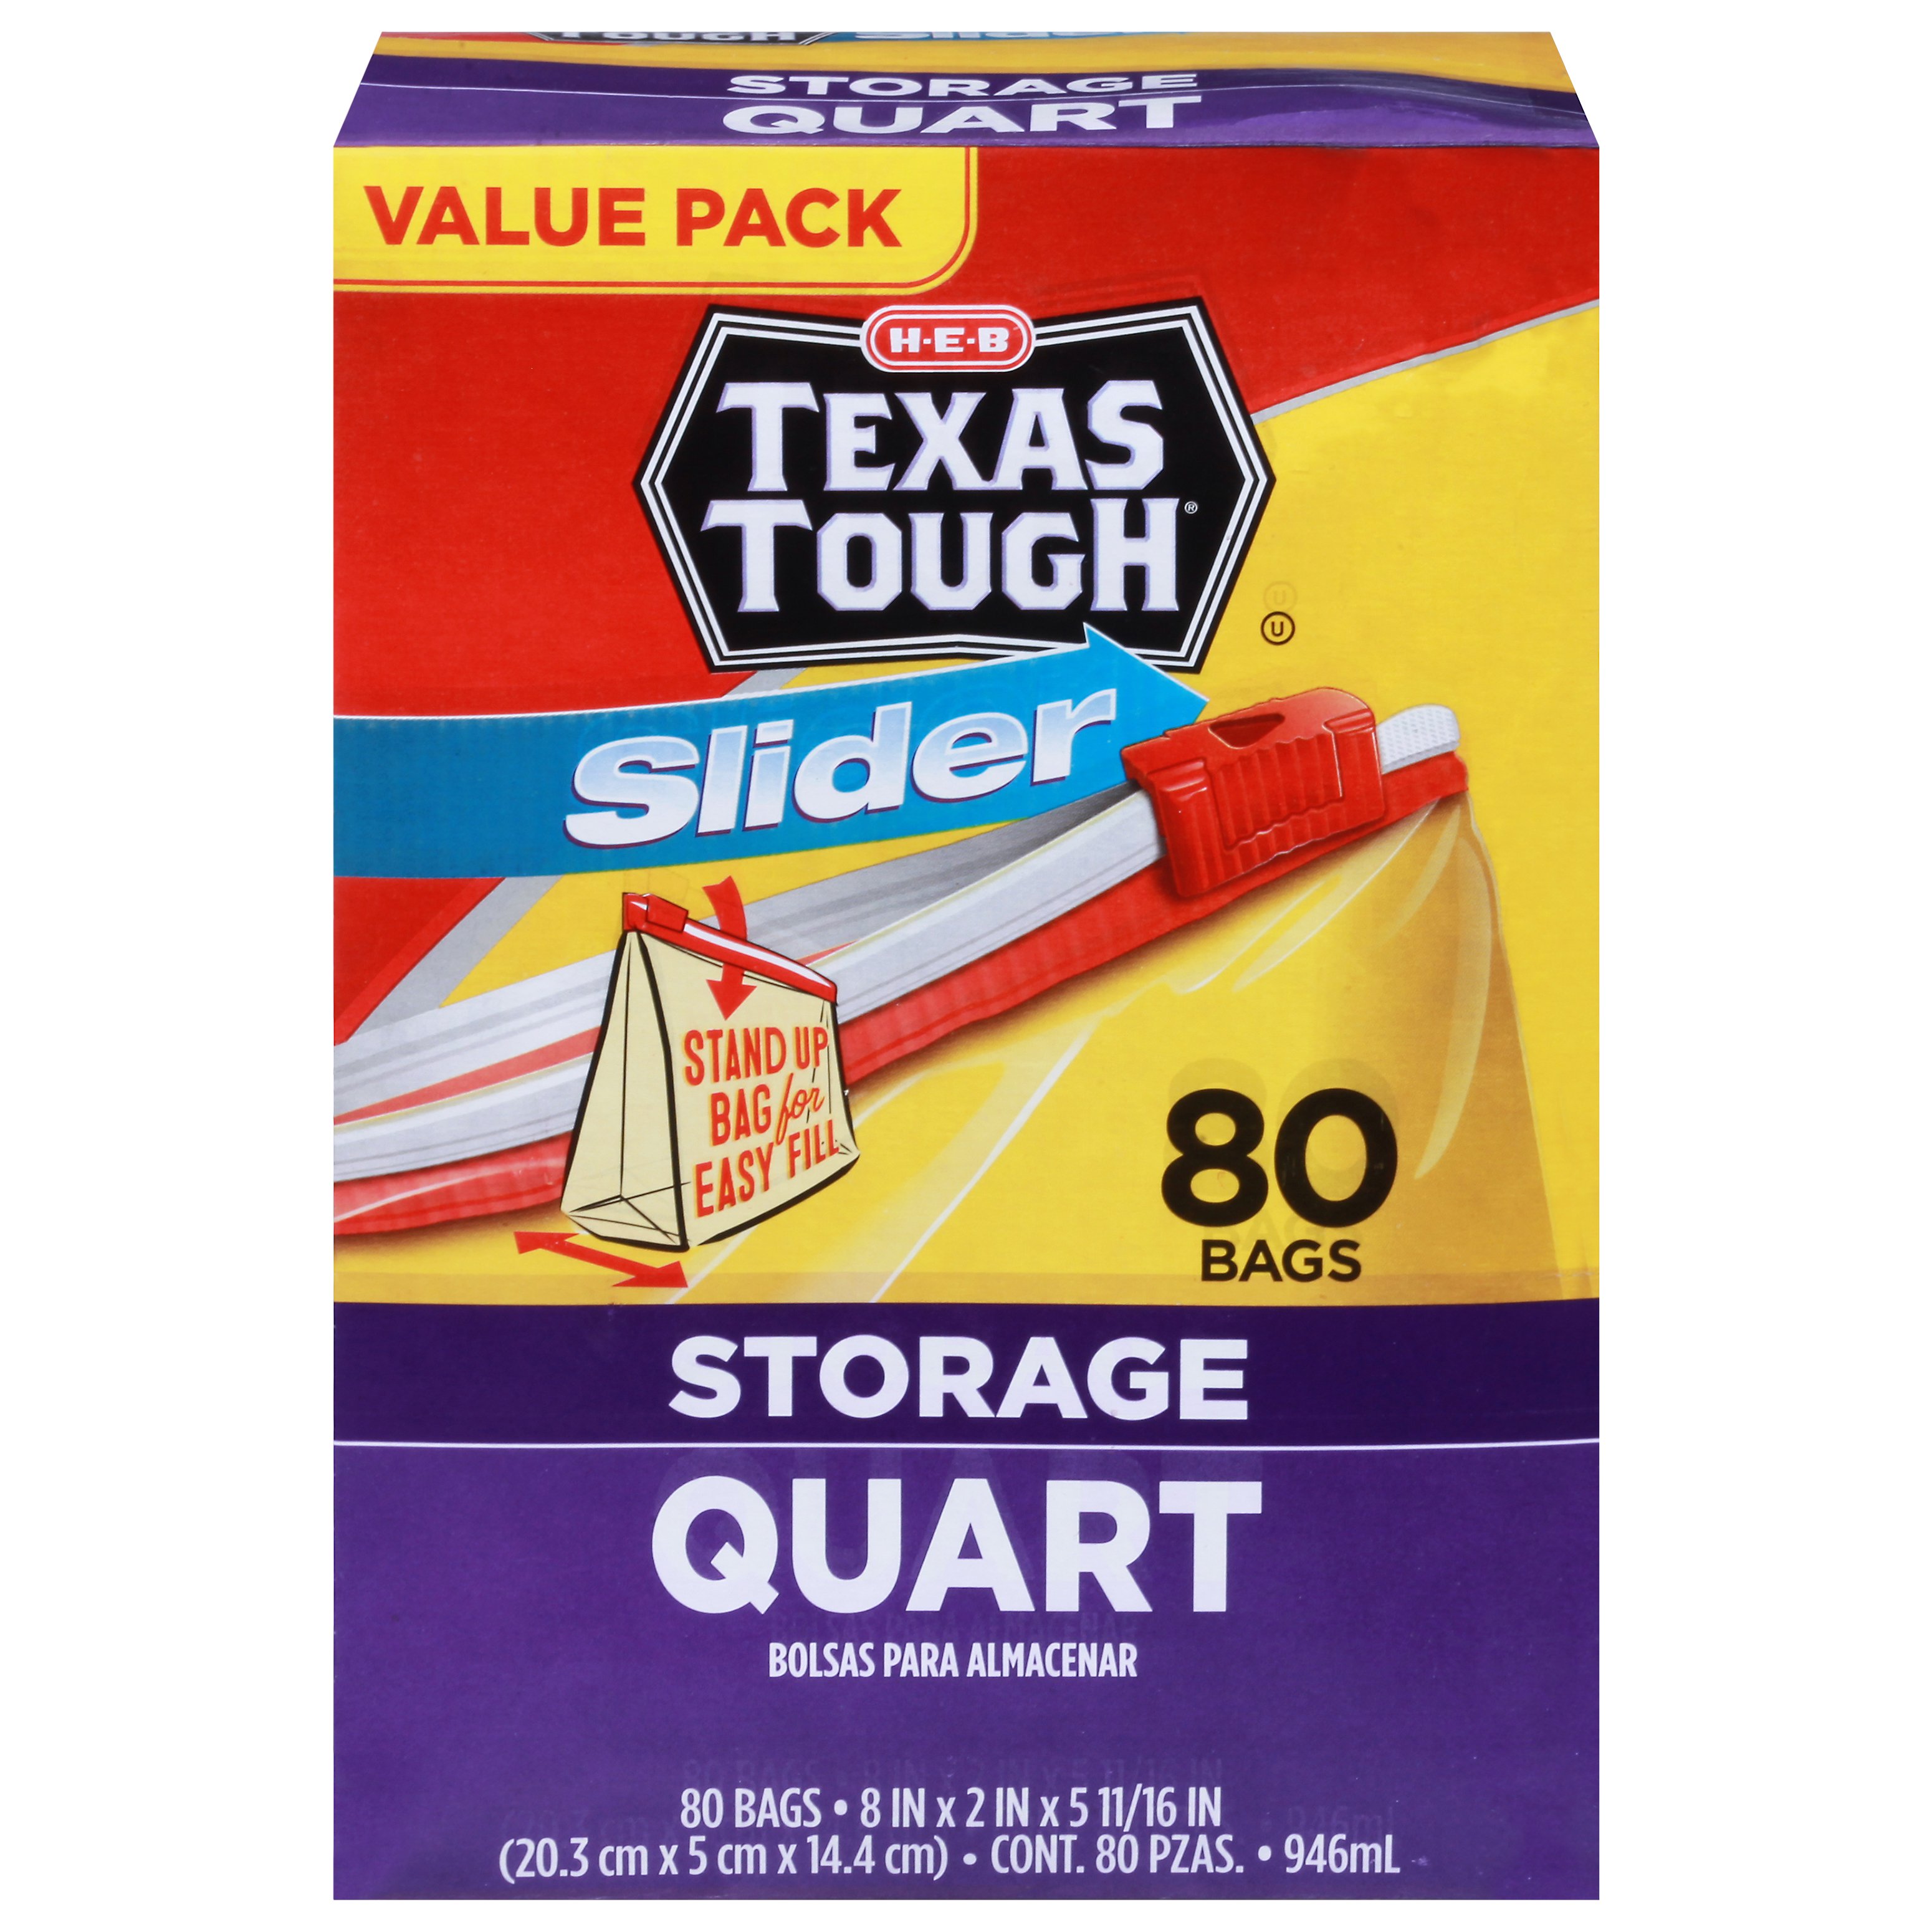 H-E-B Texas Tough Slider Quart Storage Bags - Shop Storage Bags at H-E-B